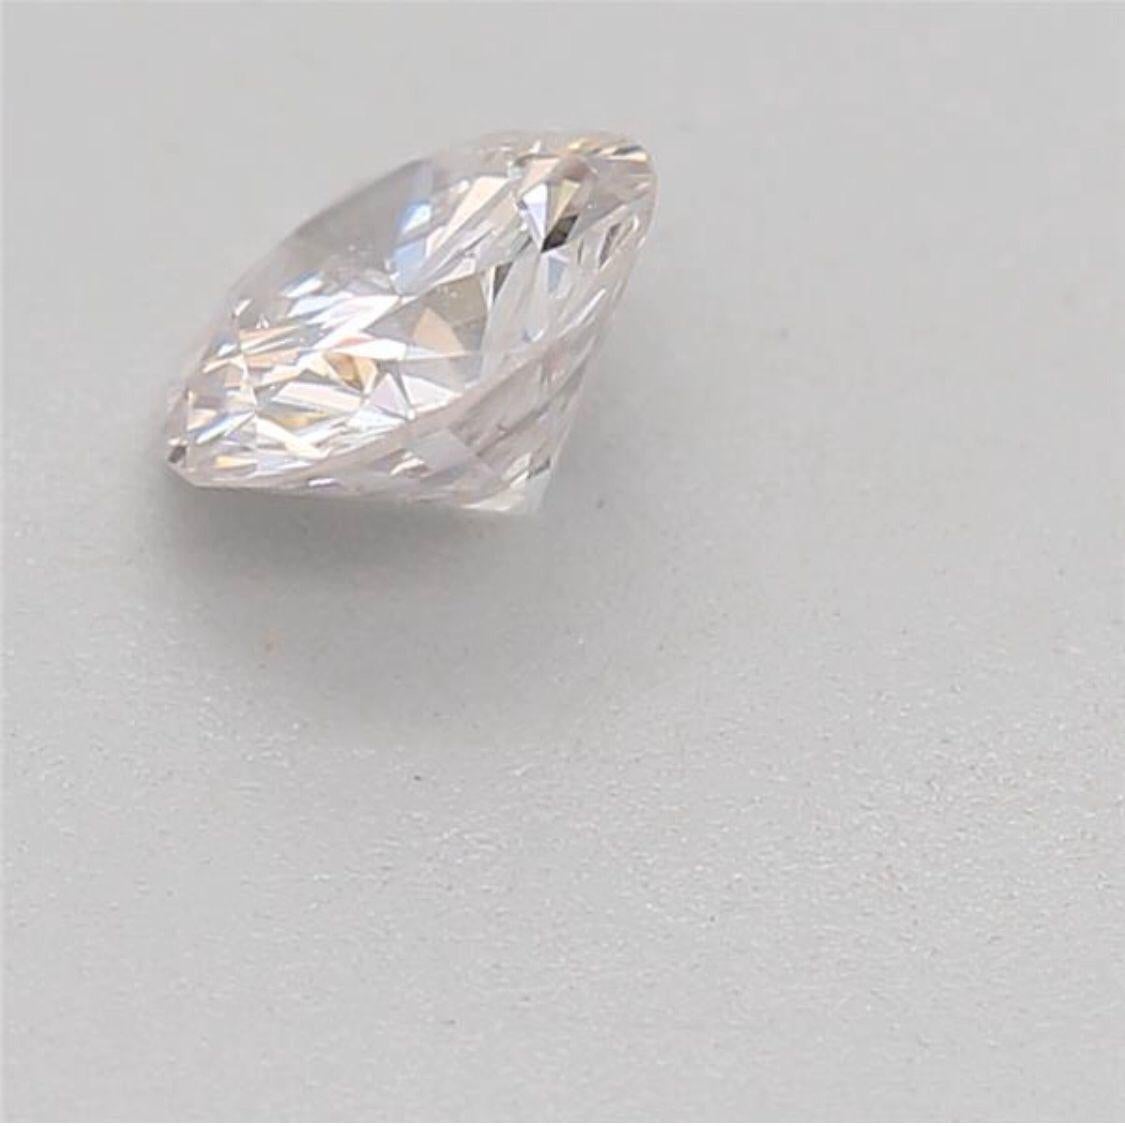 Diamant rose pâle taille ronde de 0,31 carat de pureté SI1 certifié CGL en vente 5